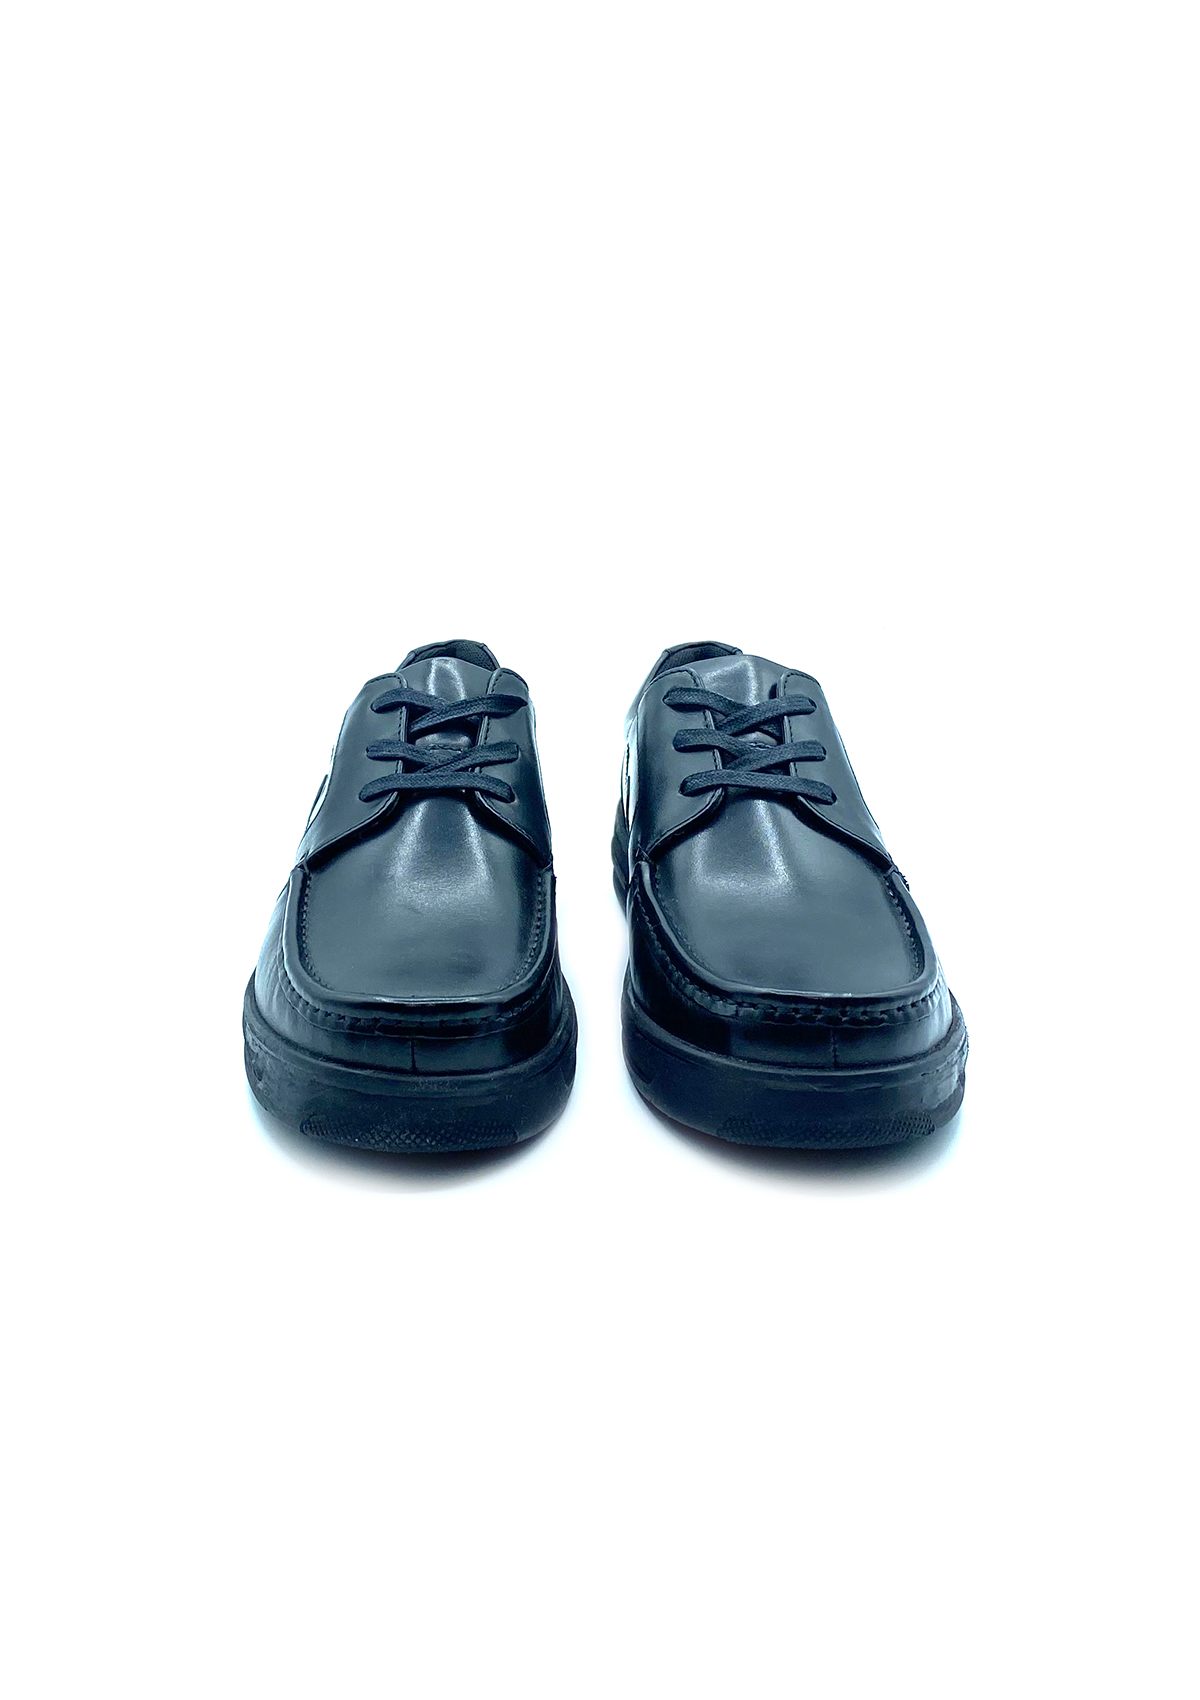 Dubarry Men Slip-on School Shoes Kori